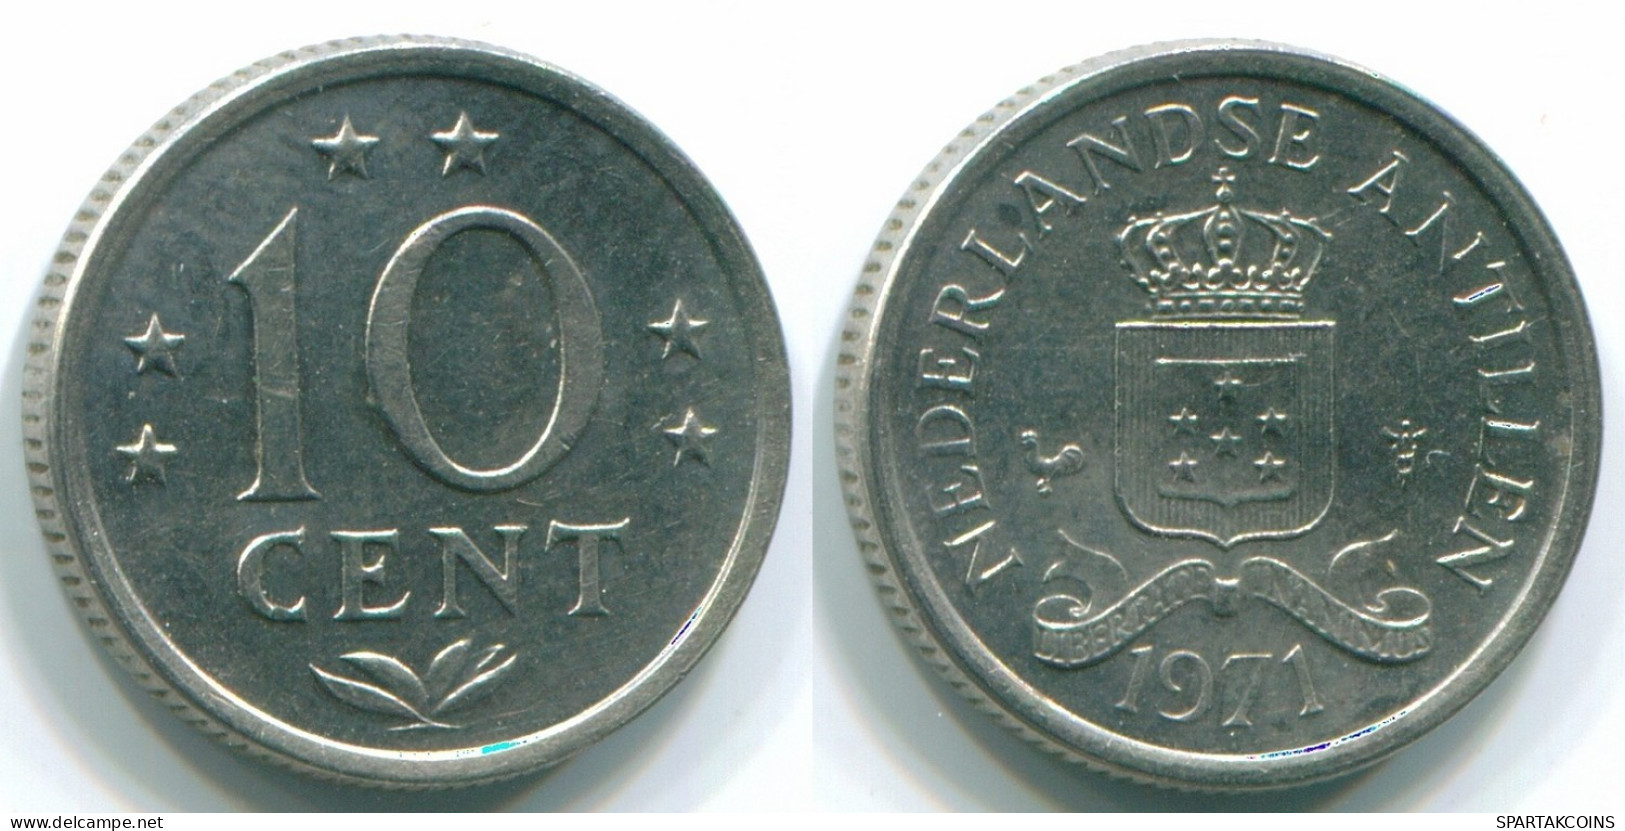 10 CENTS 1971 NIEDERLÄNDISCHE ANTILLEN Nickel Koloniale Münze #S13453.D.A - Netherlands Antilles